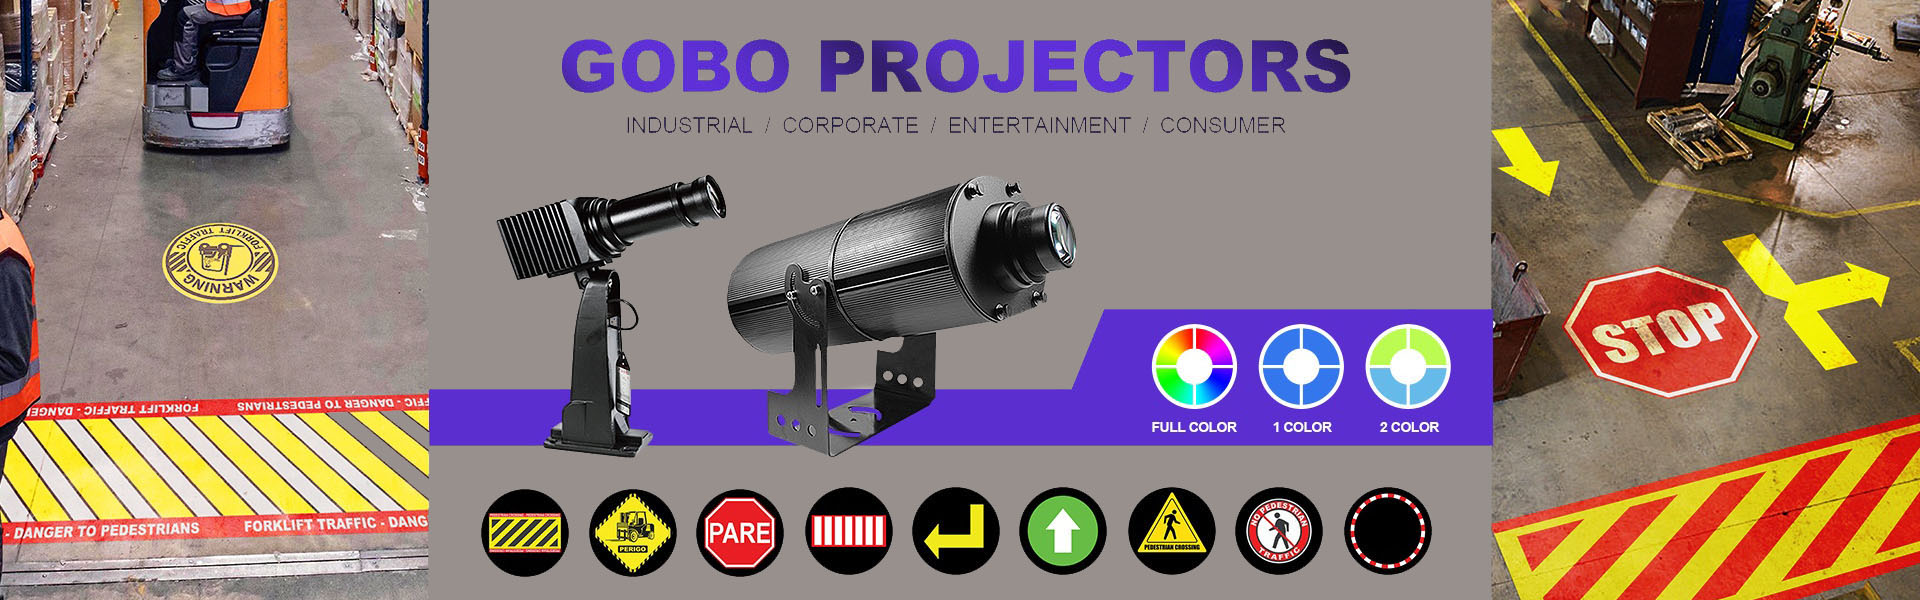 GOO logó projektor, LED Work Light, LED targonca lámpa,Wetech Electronic Technology Limited